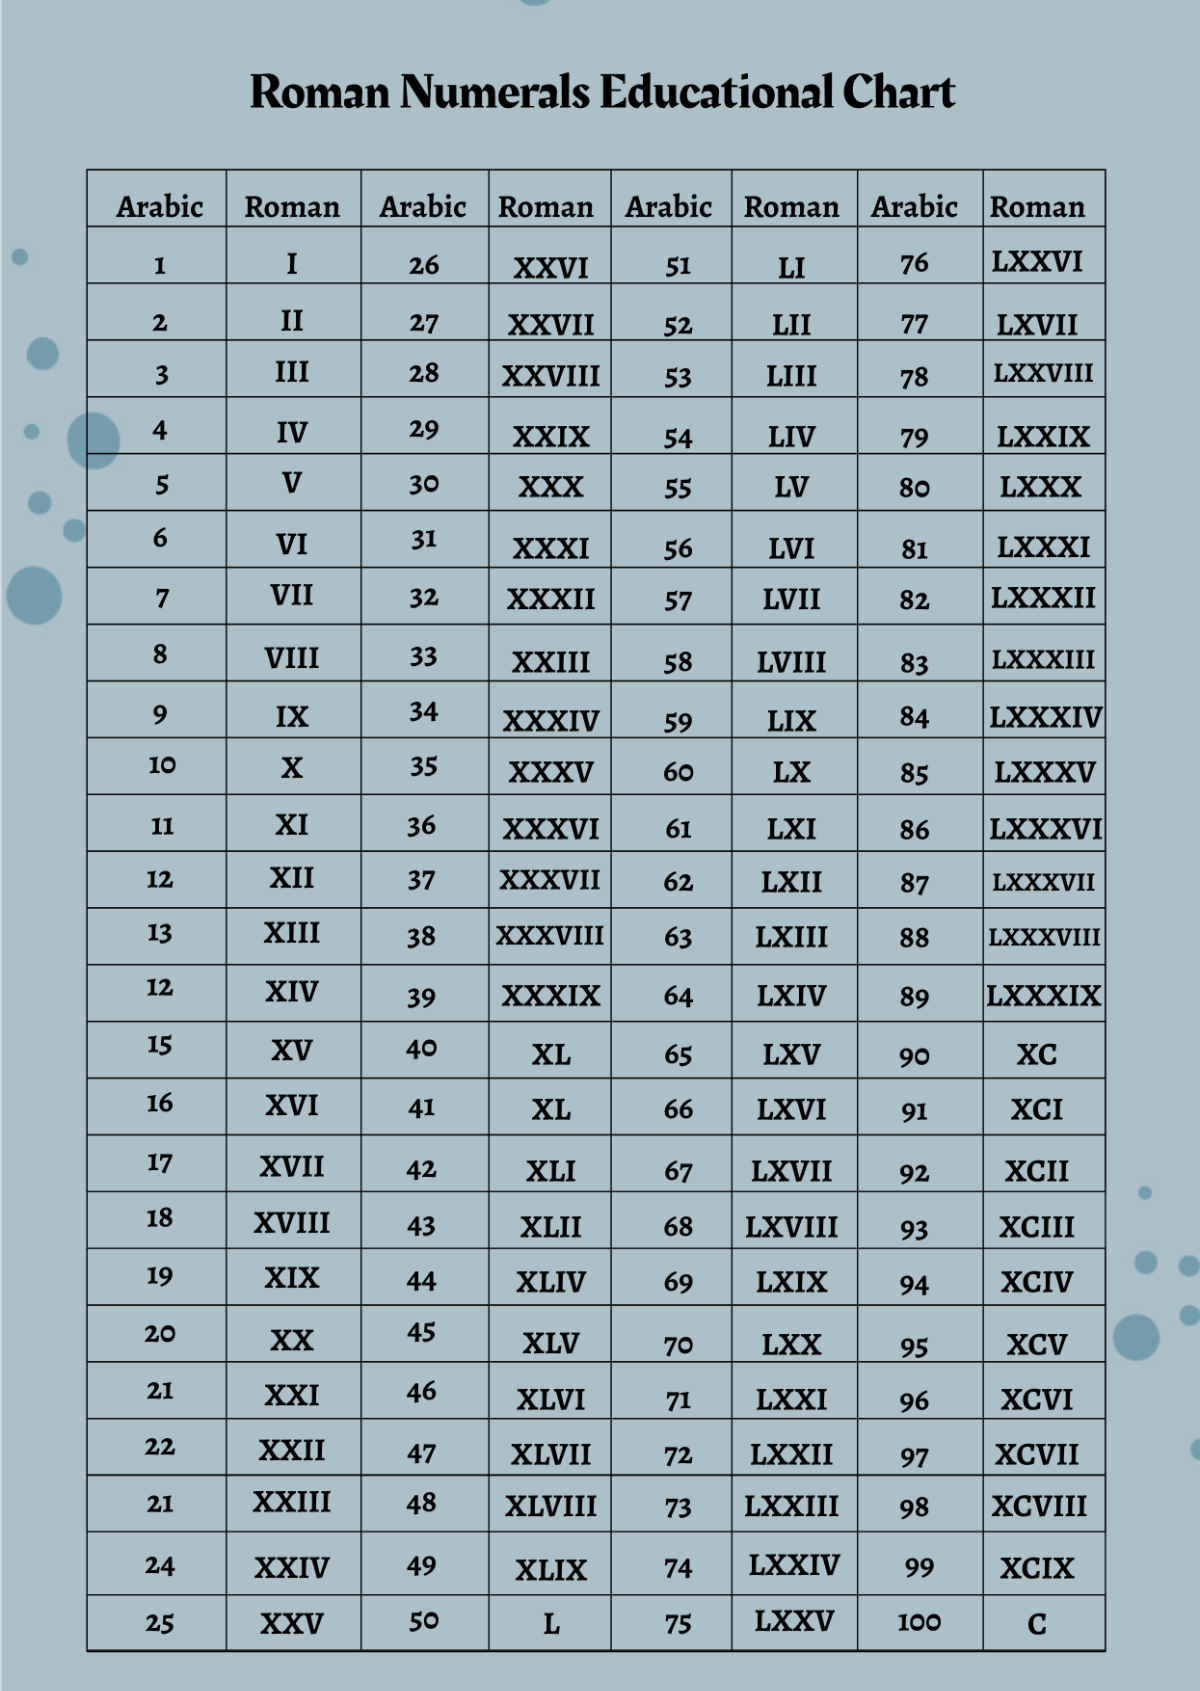 Roman Numerals Educational Chart